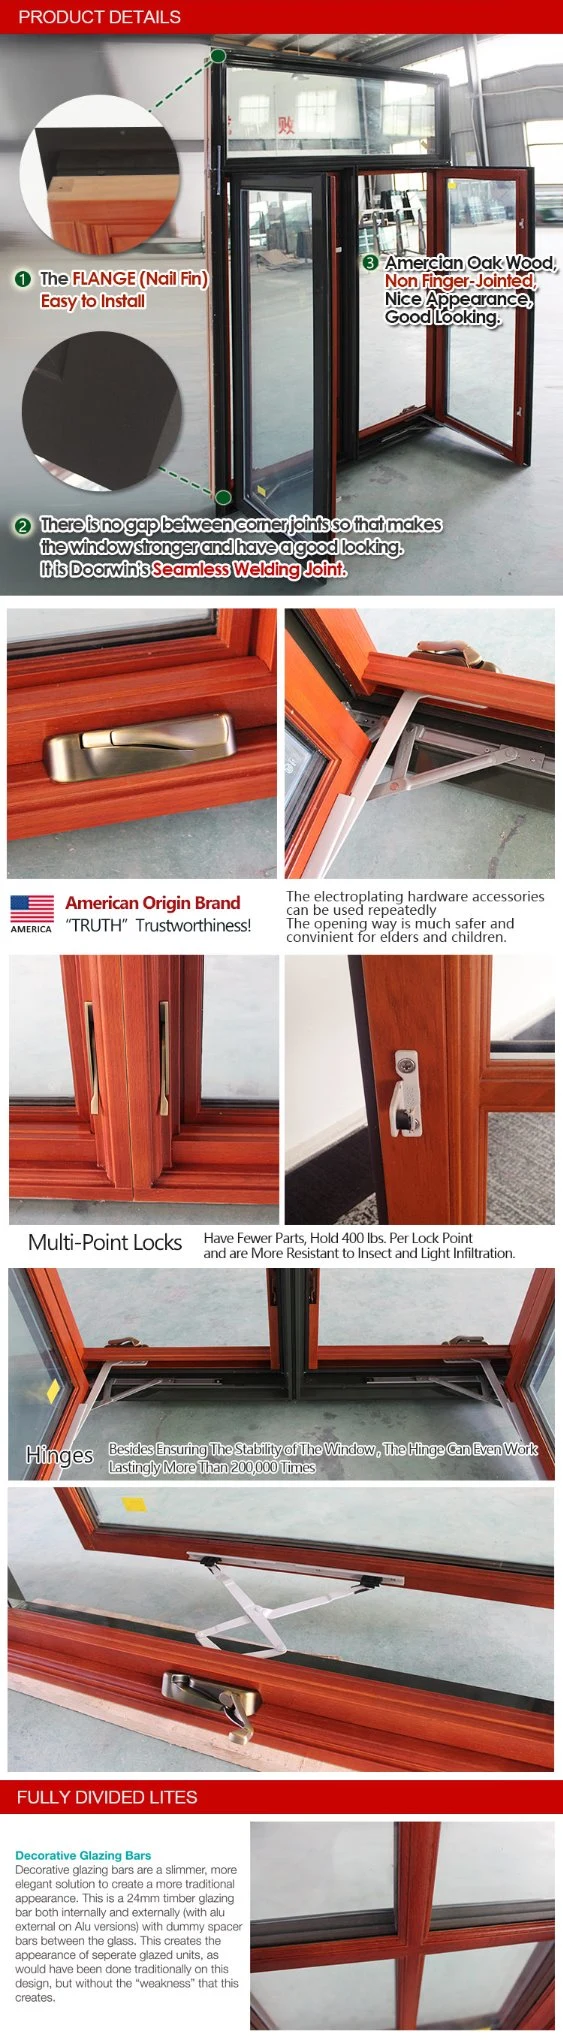 American Style Casement Window with Crank Handle, Round Top Window